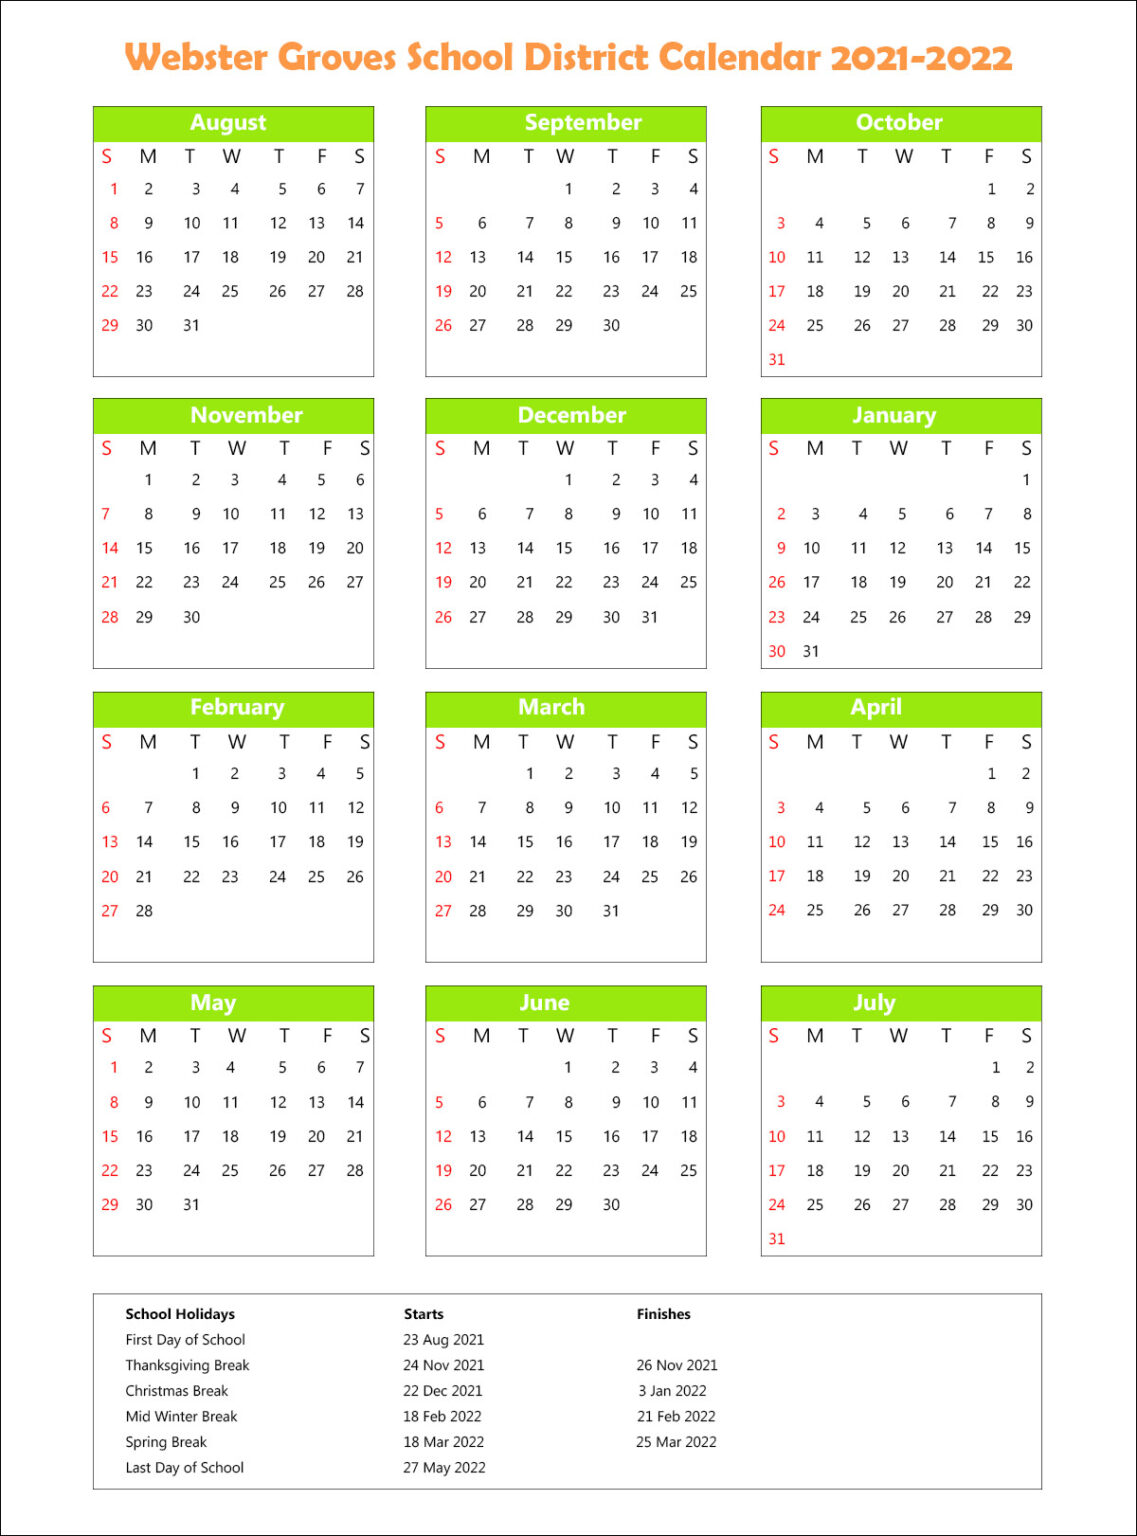 Webster Groves School District Calendar Holidays 2021-2022